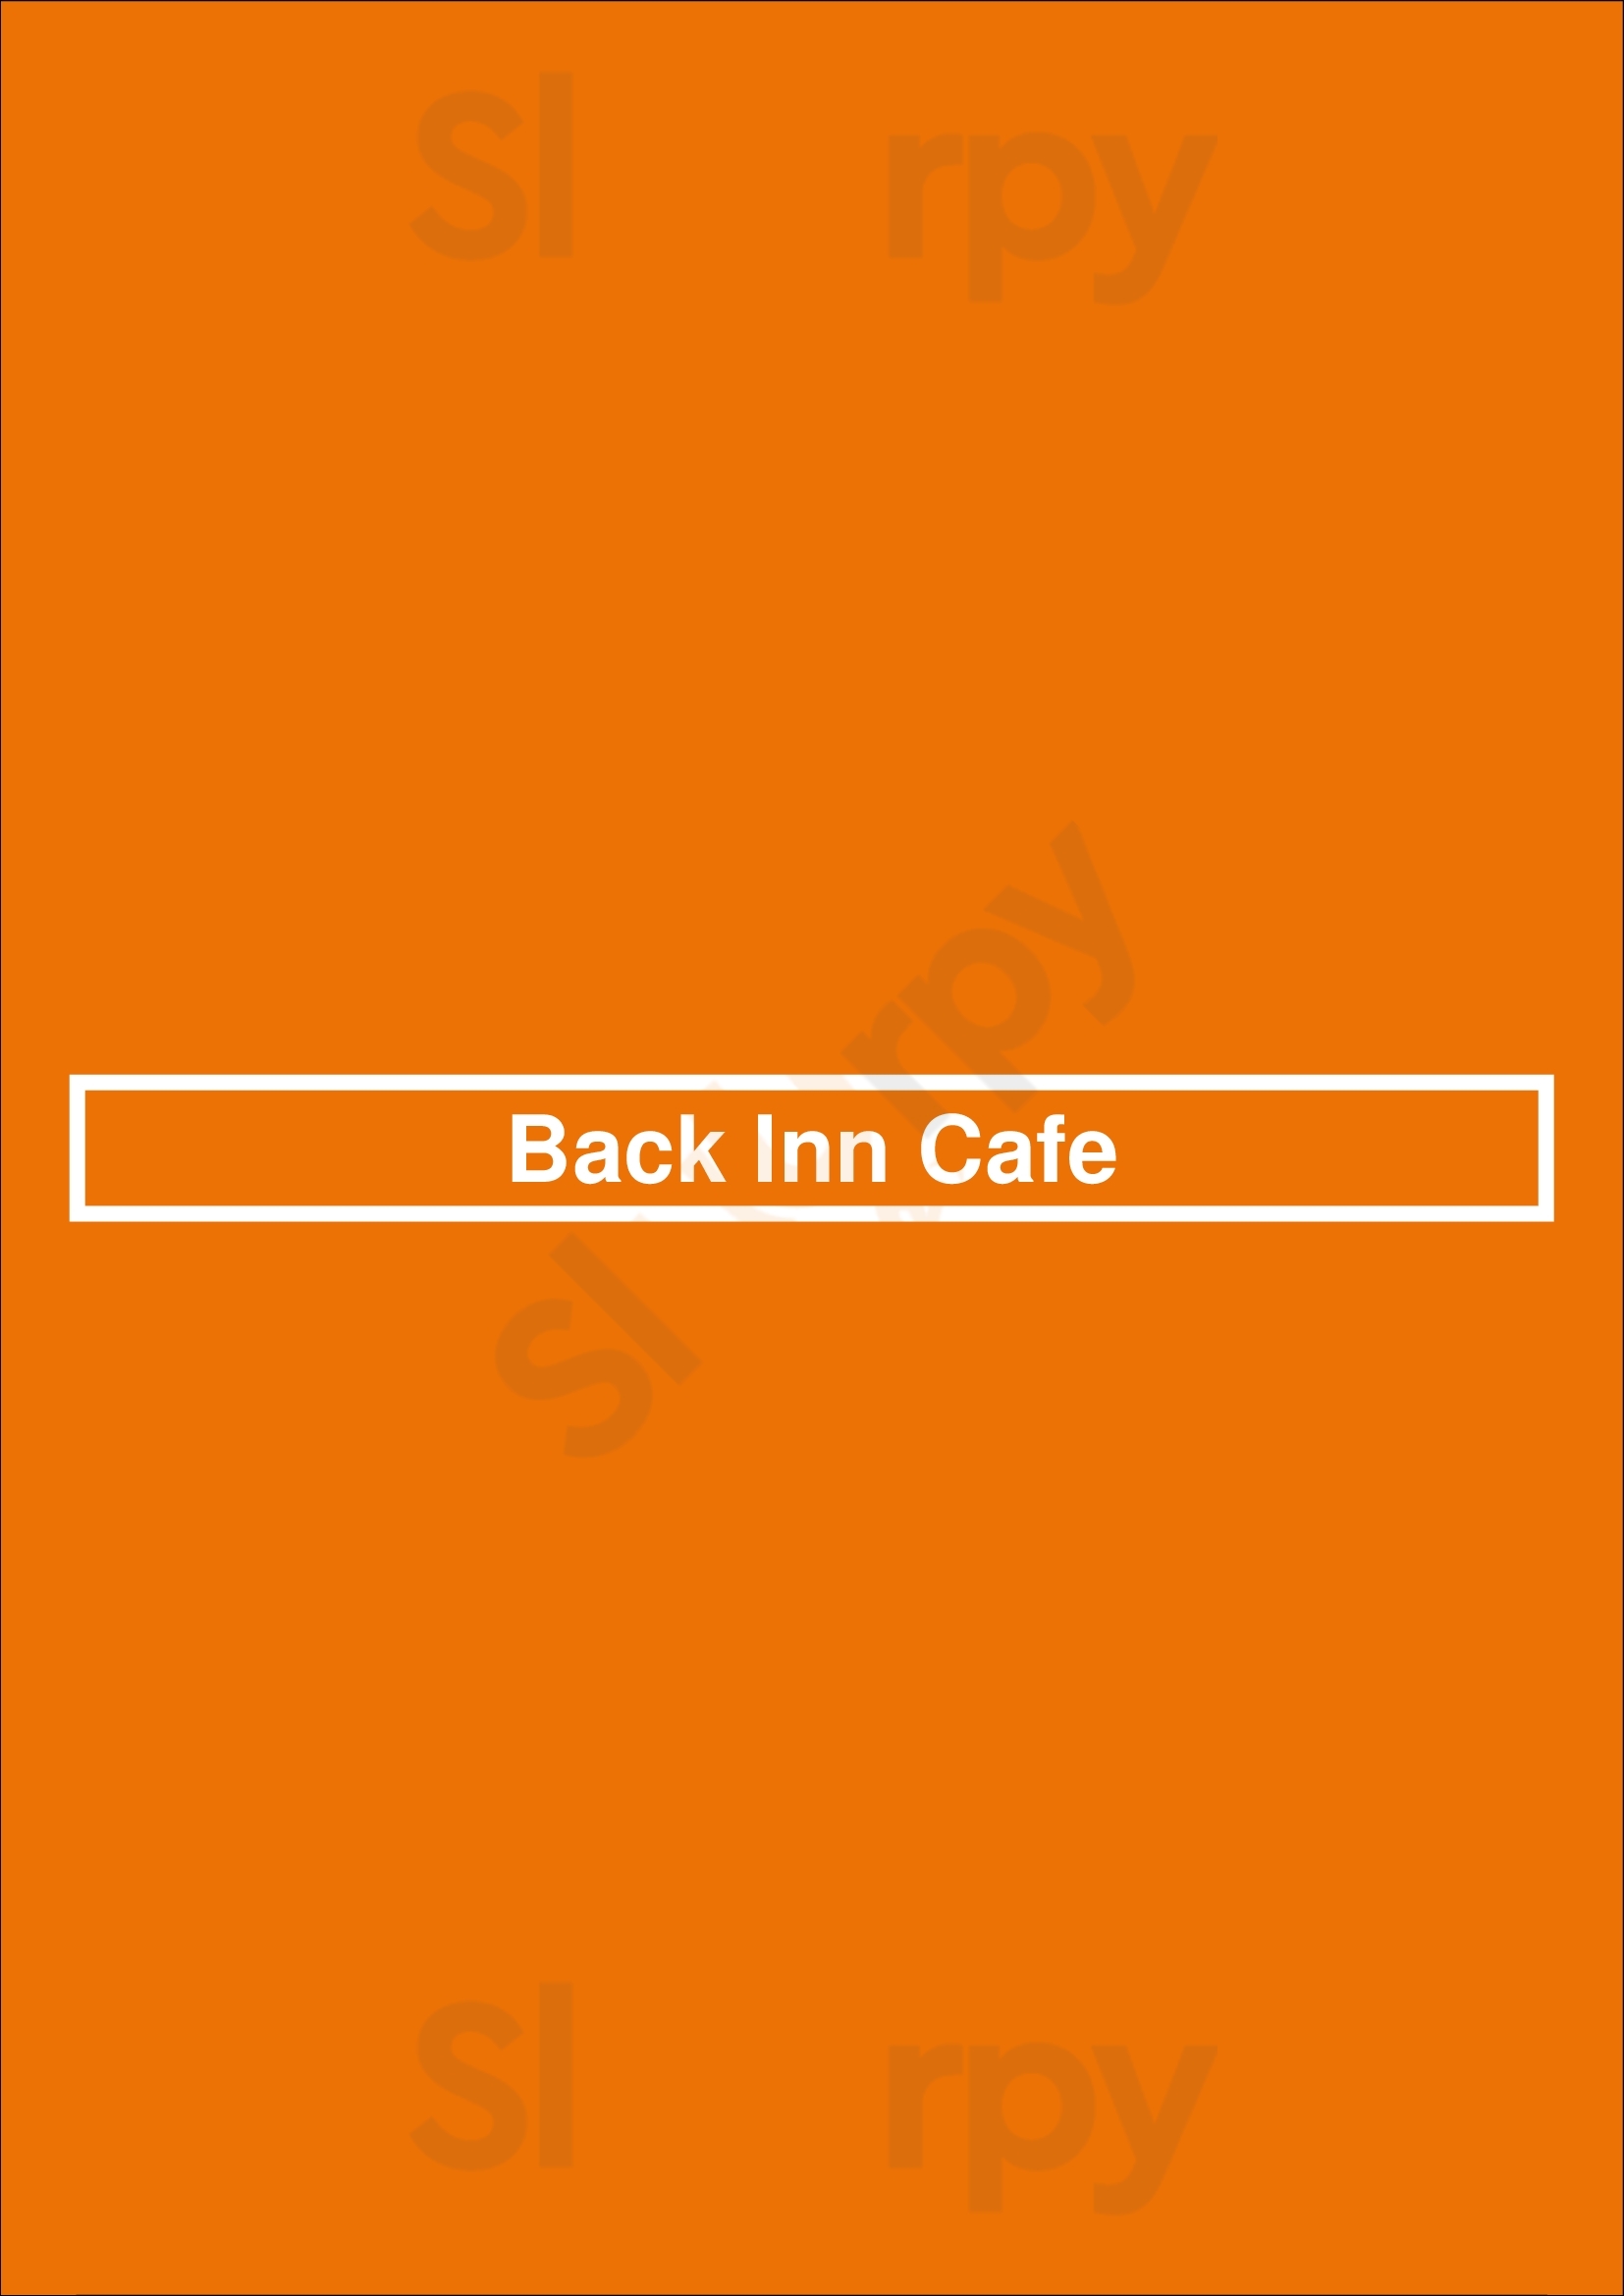 Back Inn Cafe Chattanooga Menu - 1